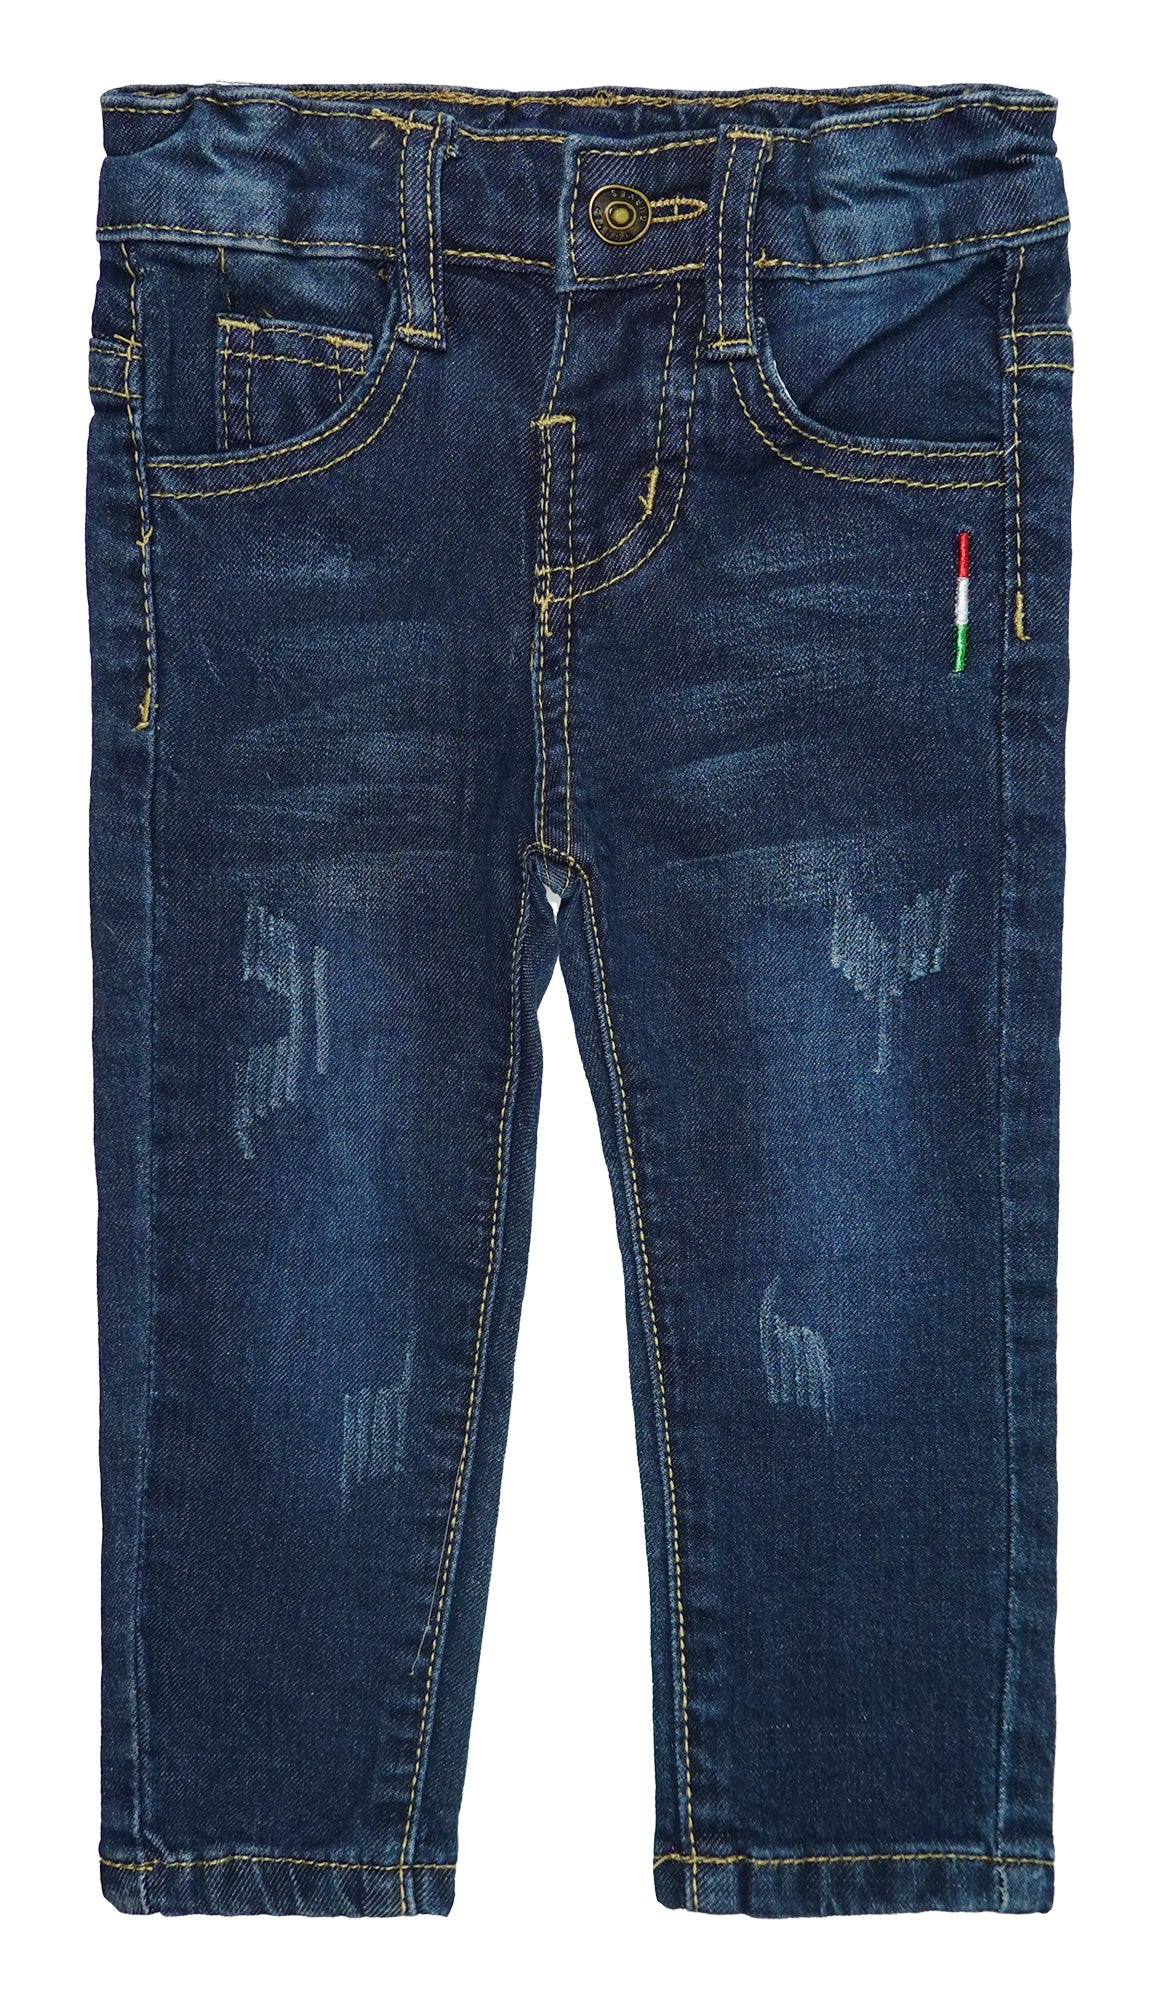 Baby Little Boys Girls Ripped Denim Soft Slim Pants Jeans